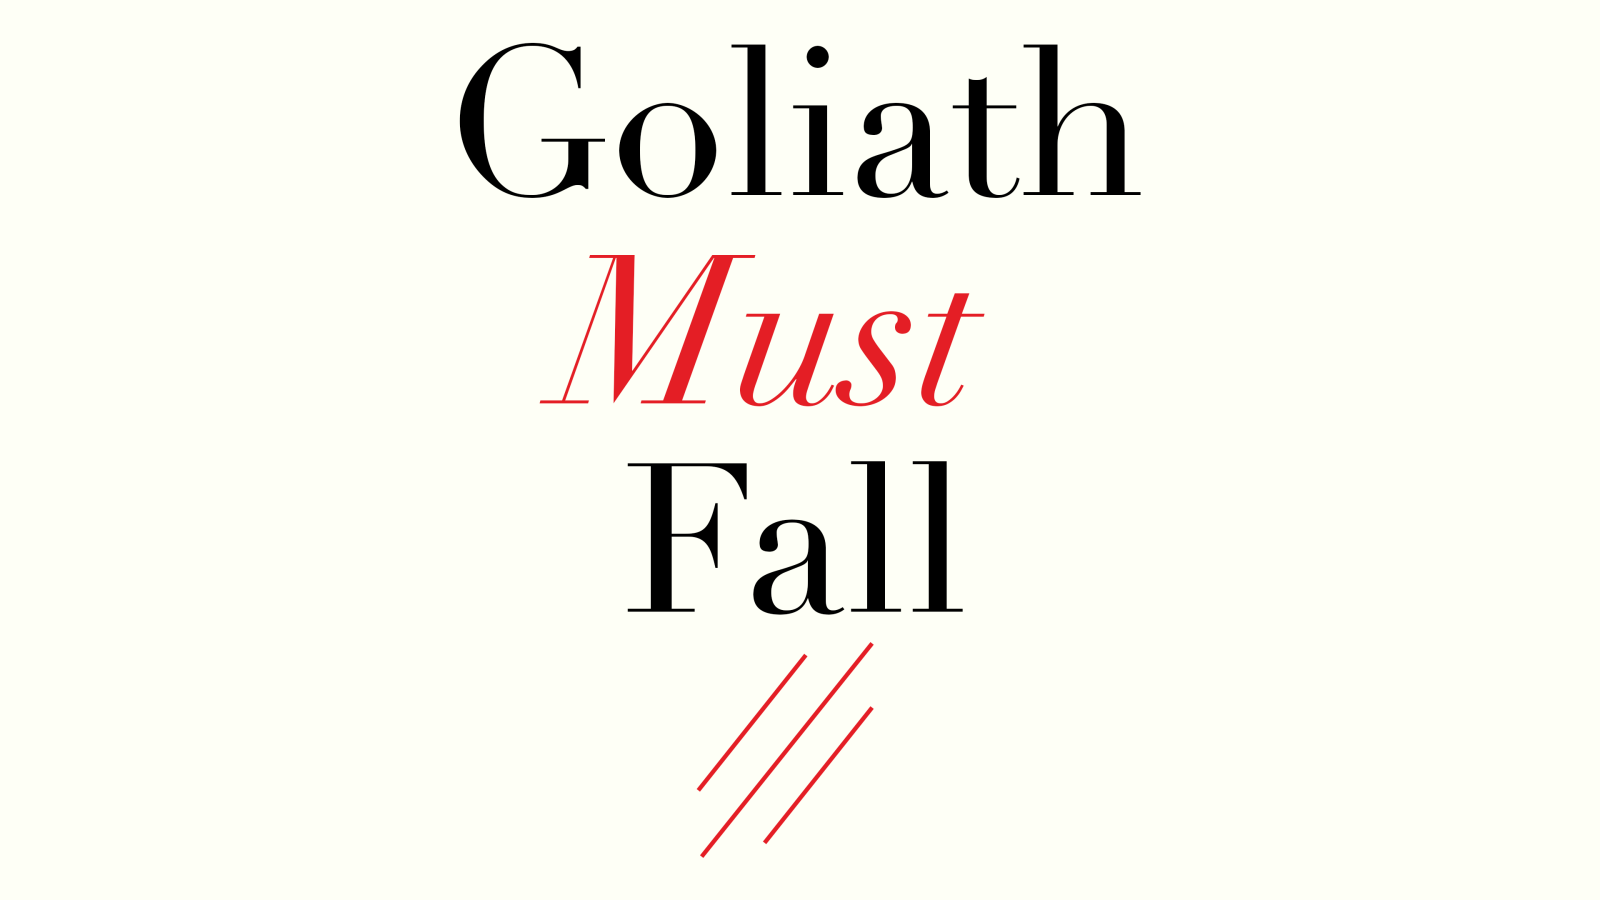 Goliath Must Fall